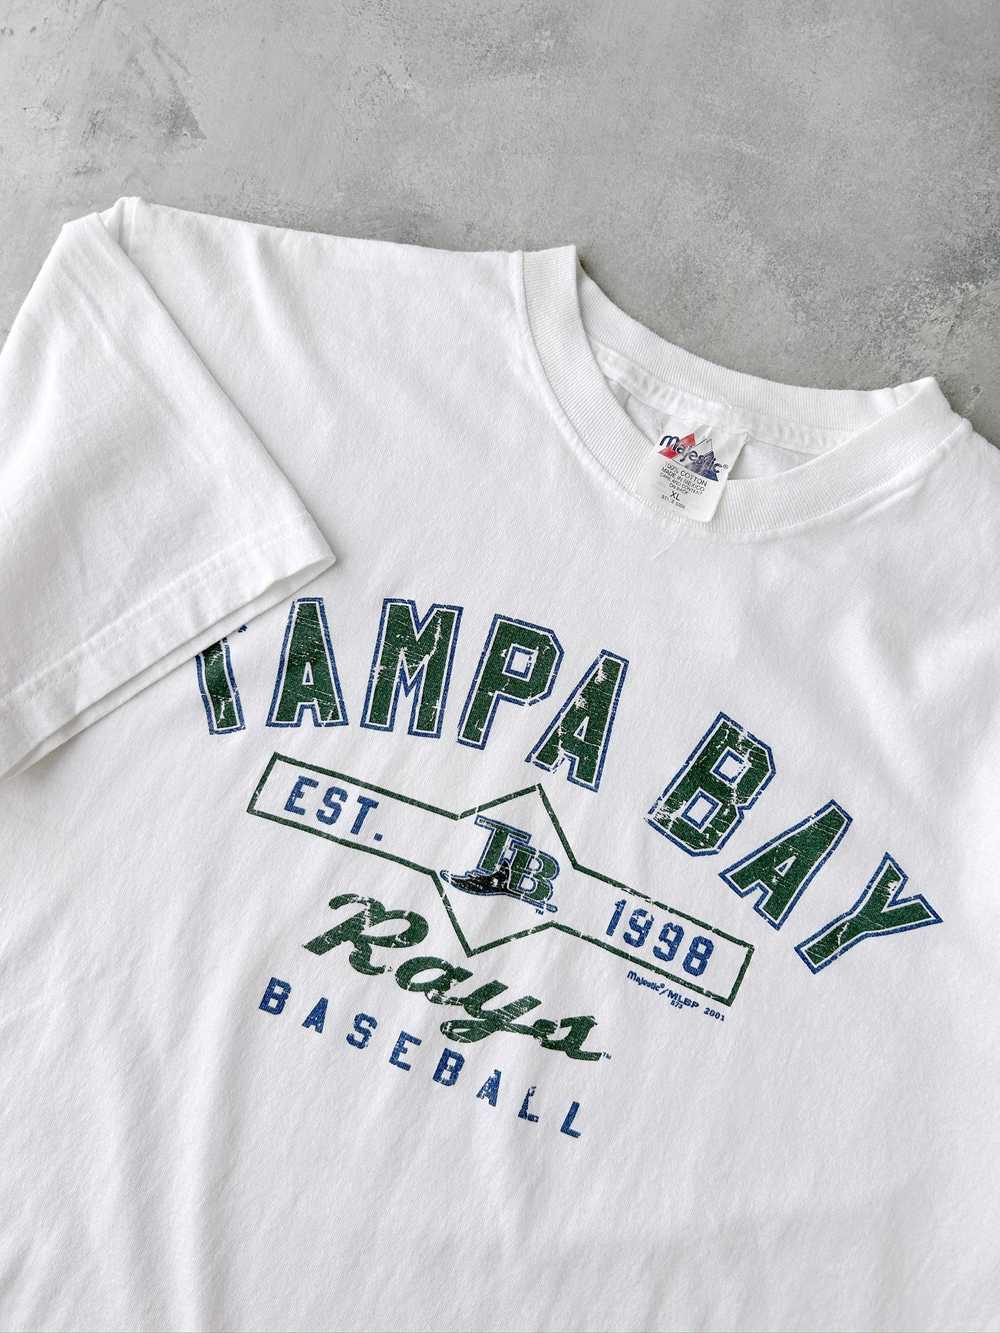 Tampa Bay Rays T-Shirt '01 - XL - image 2